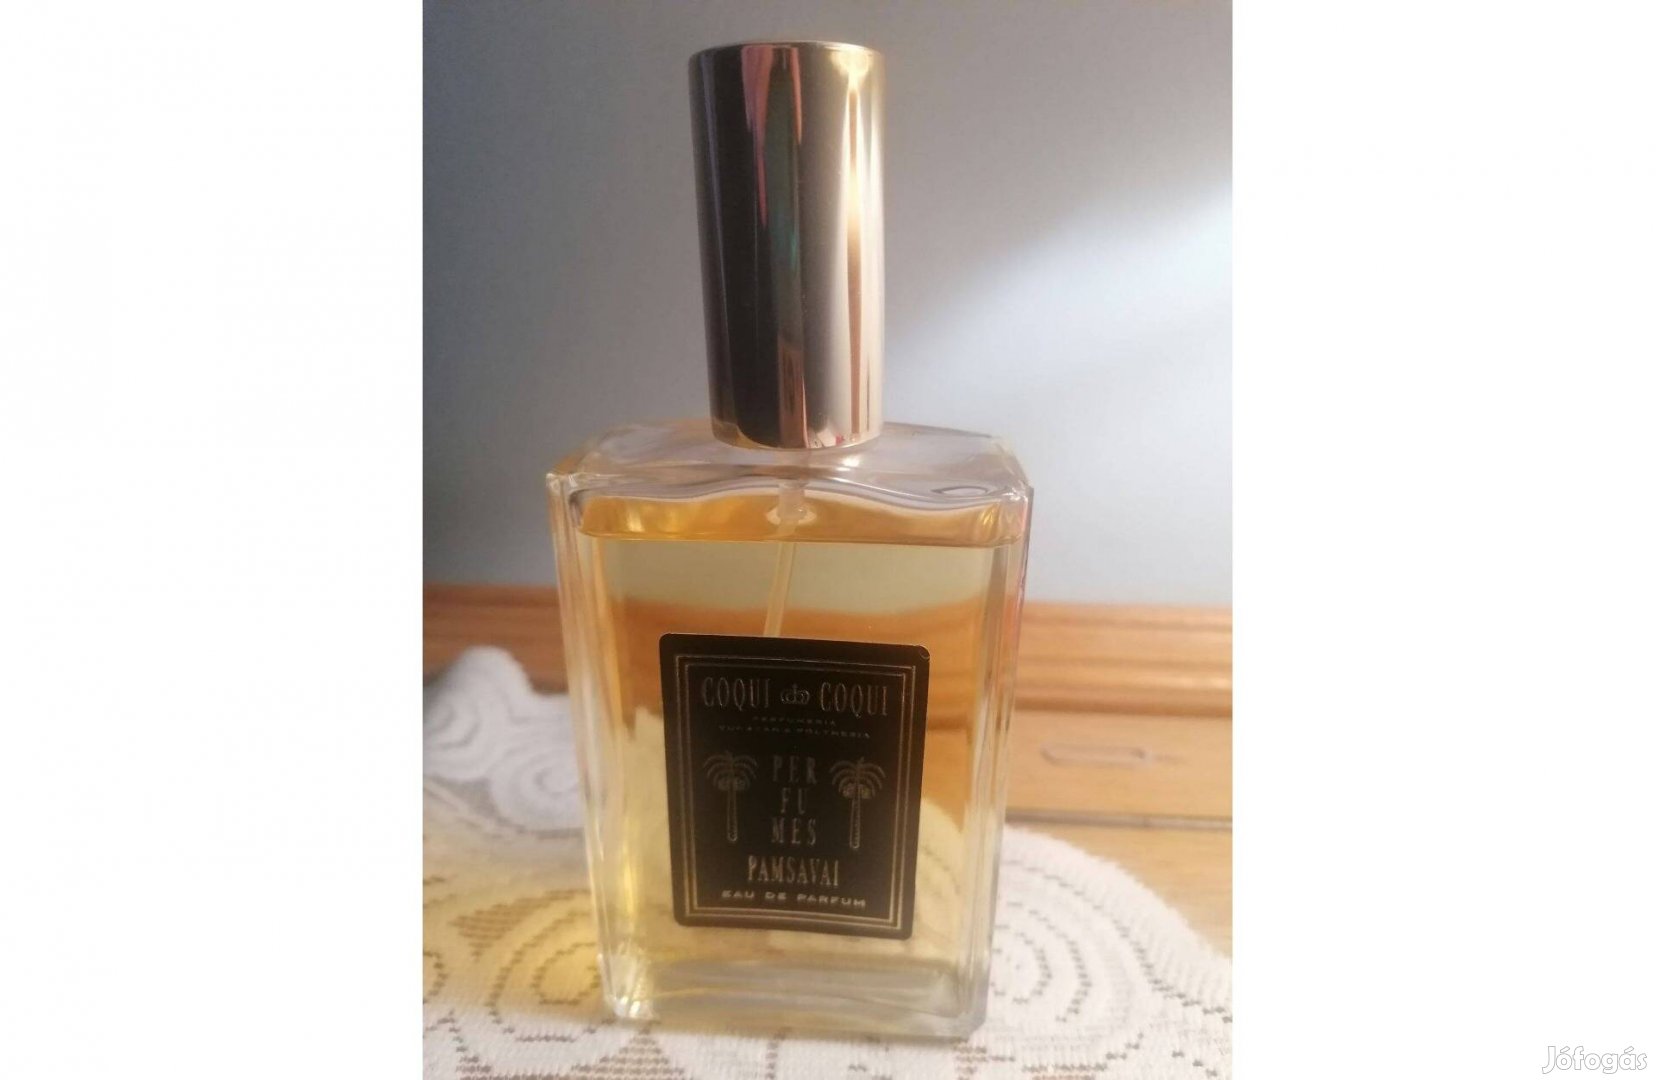 Prémium 100 ml unisex argentin parfüm: Coqui Pamsavai